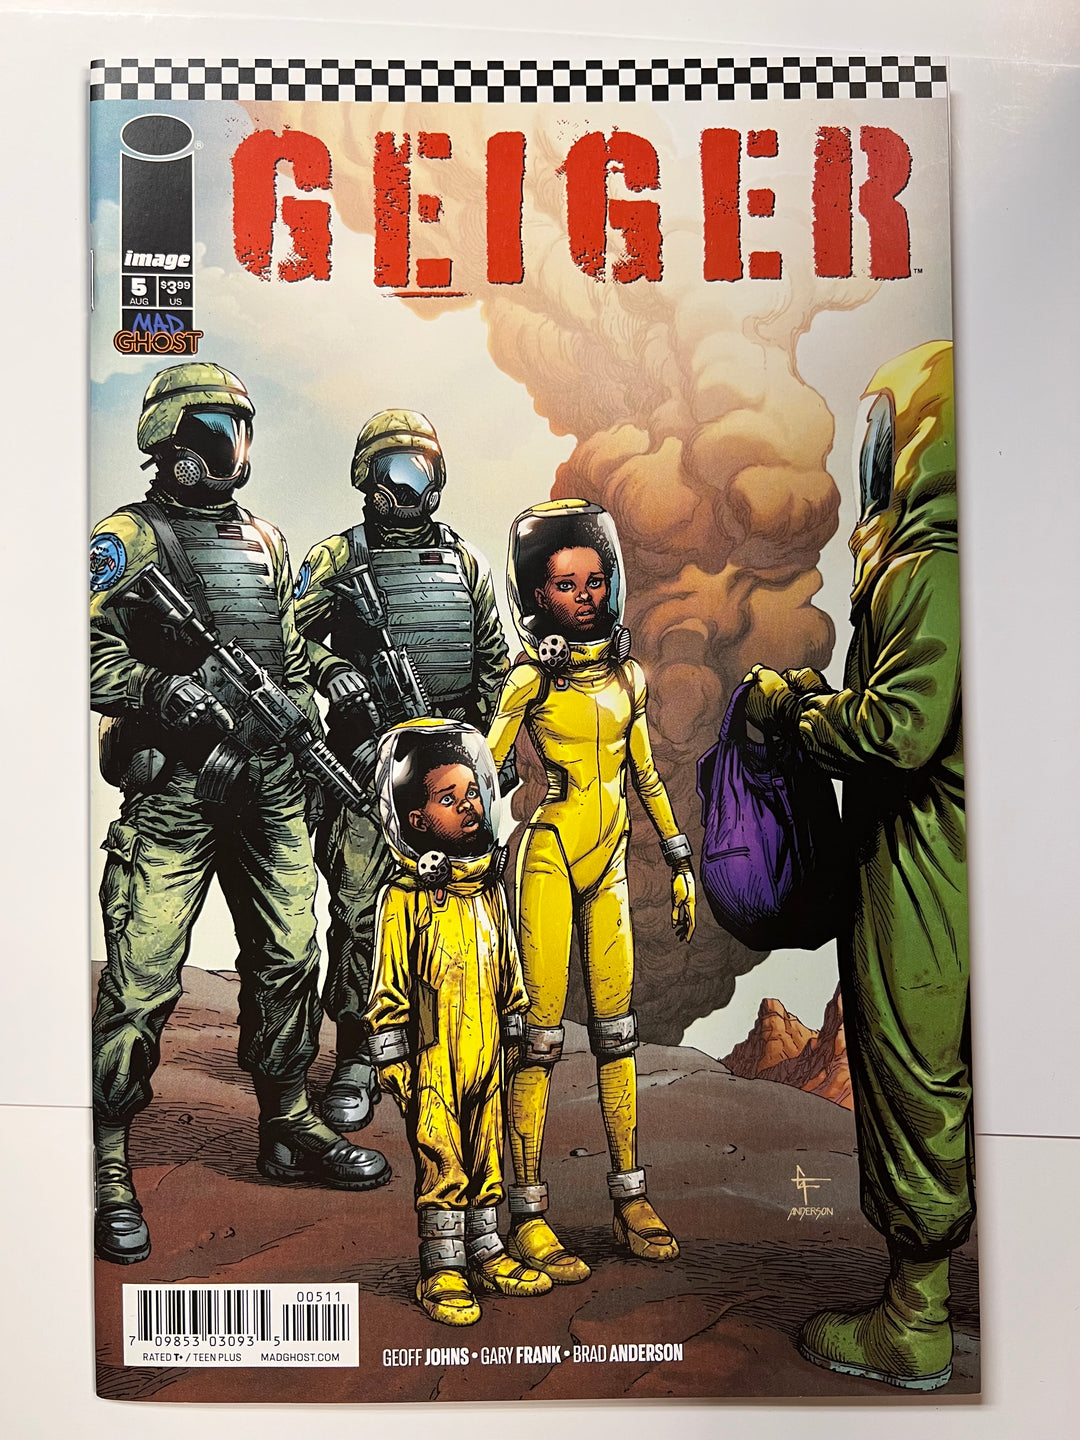 Geiger #5 Image 2021 VF/NM